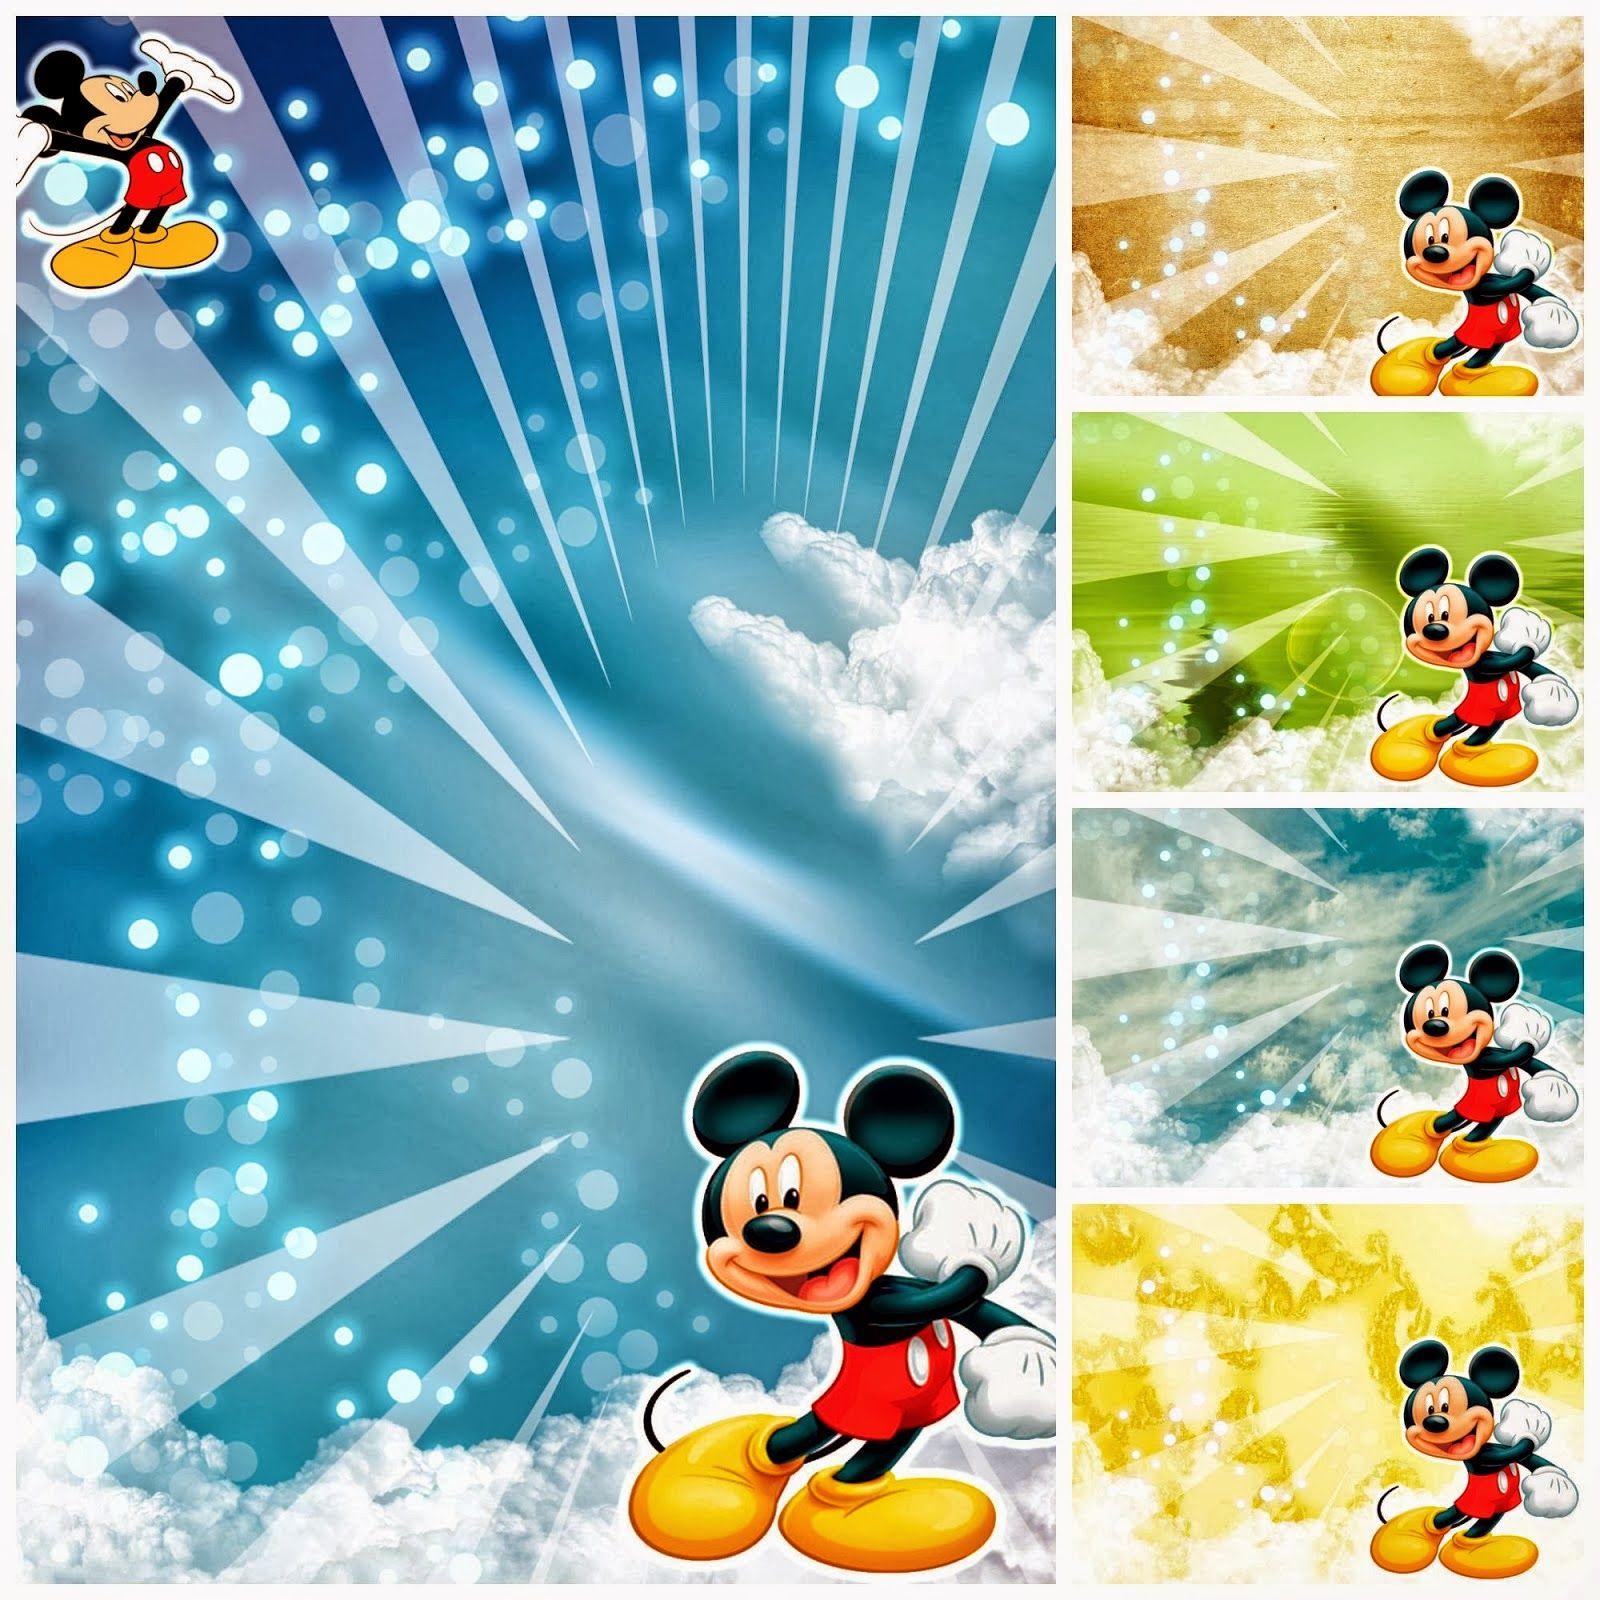 Mickey Mouse Cartoon wallpaper. HD Wallpaper, Background